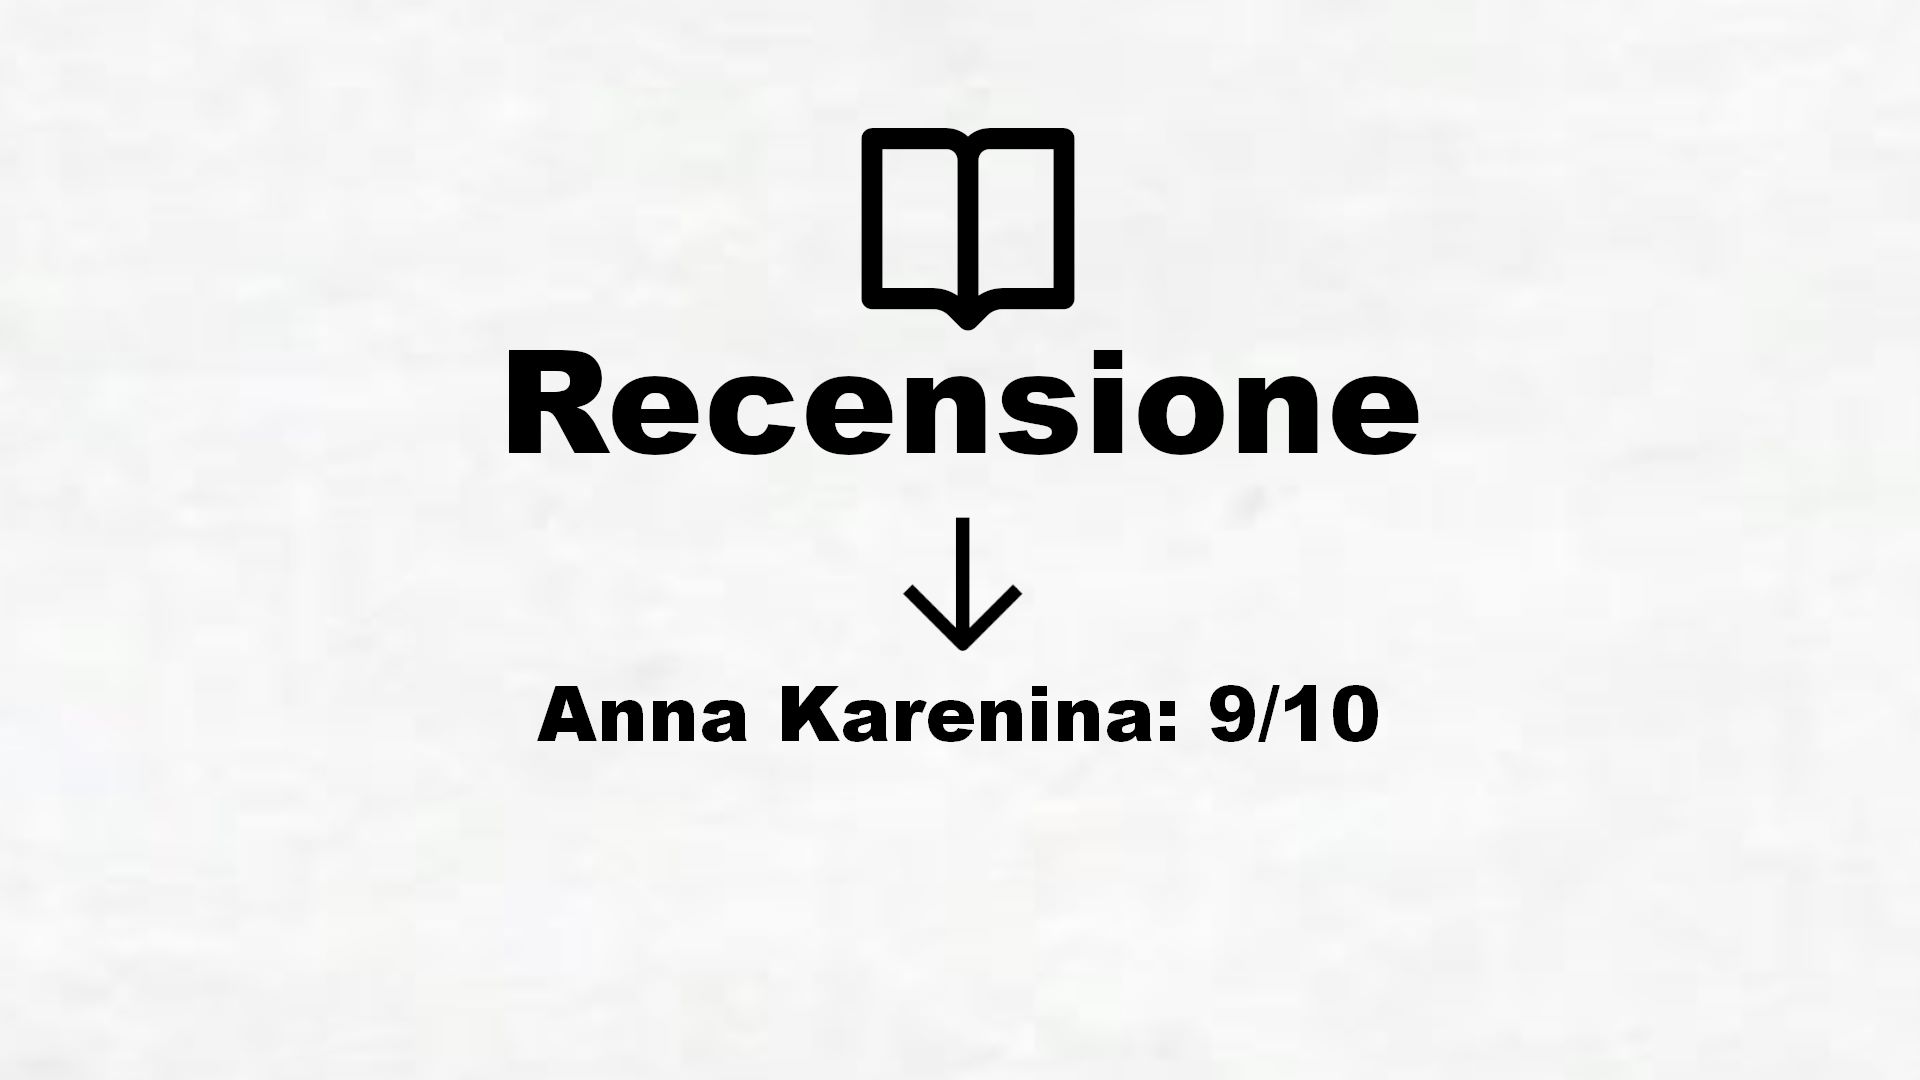 Anna Karenina: 9/10 – Recensione Libro